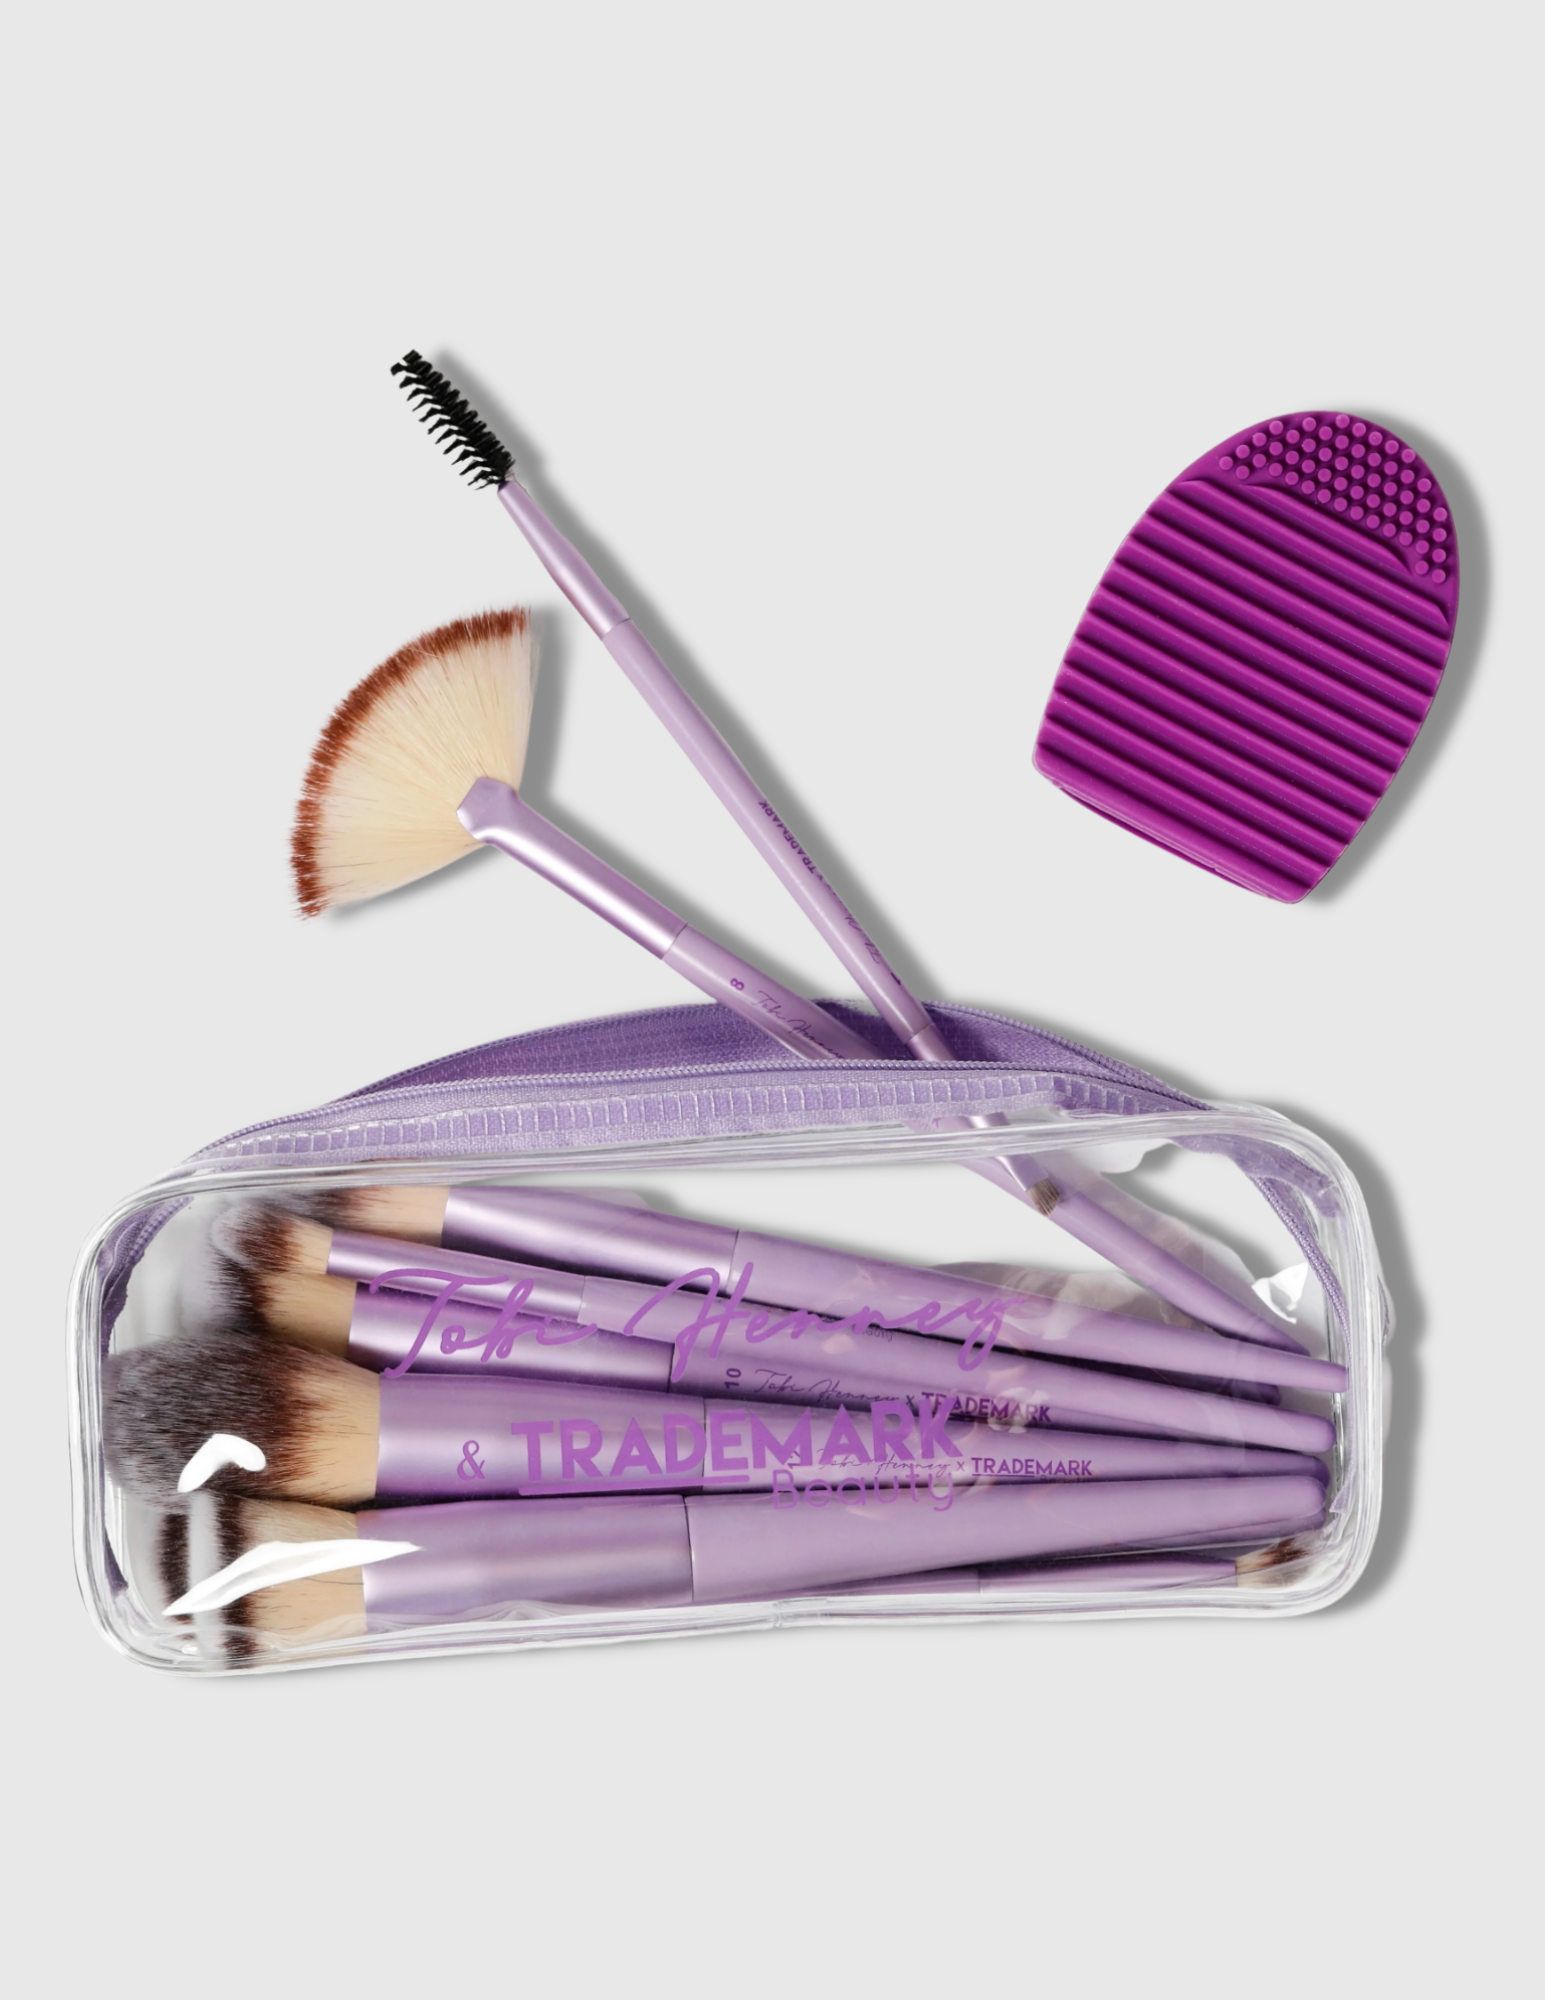 Small Powder Makeup Brush - #5 - Trademark Beauty